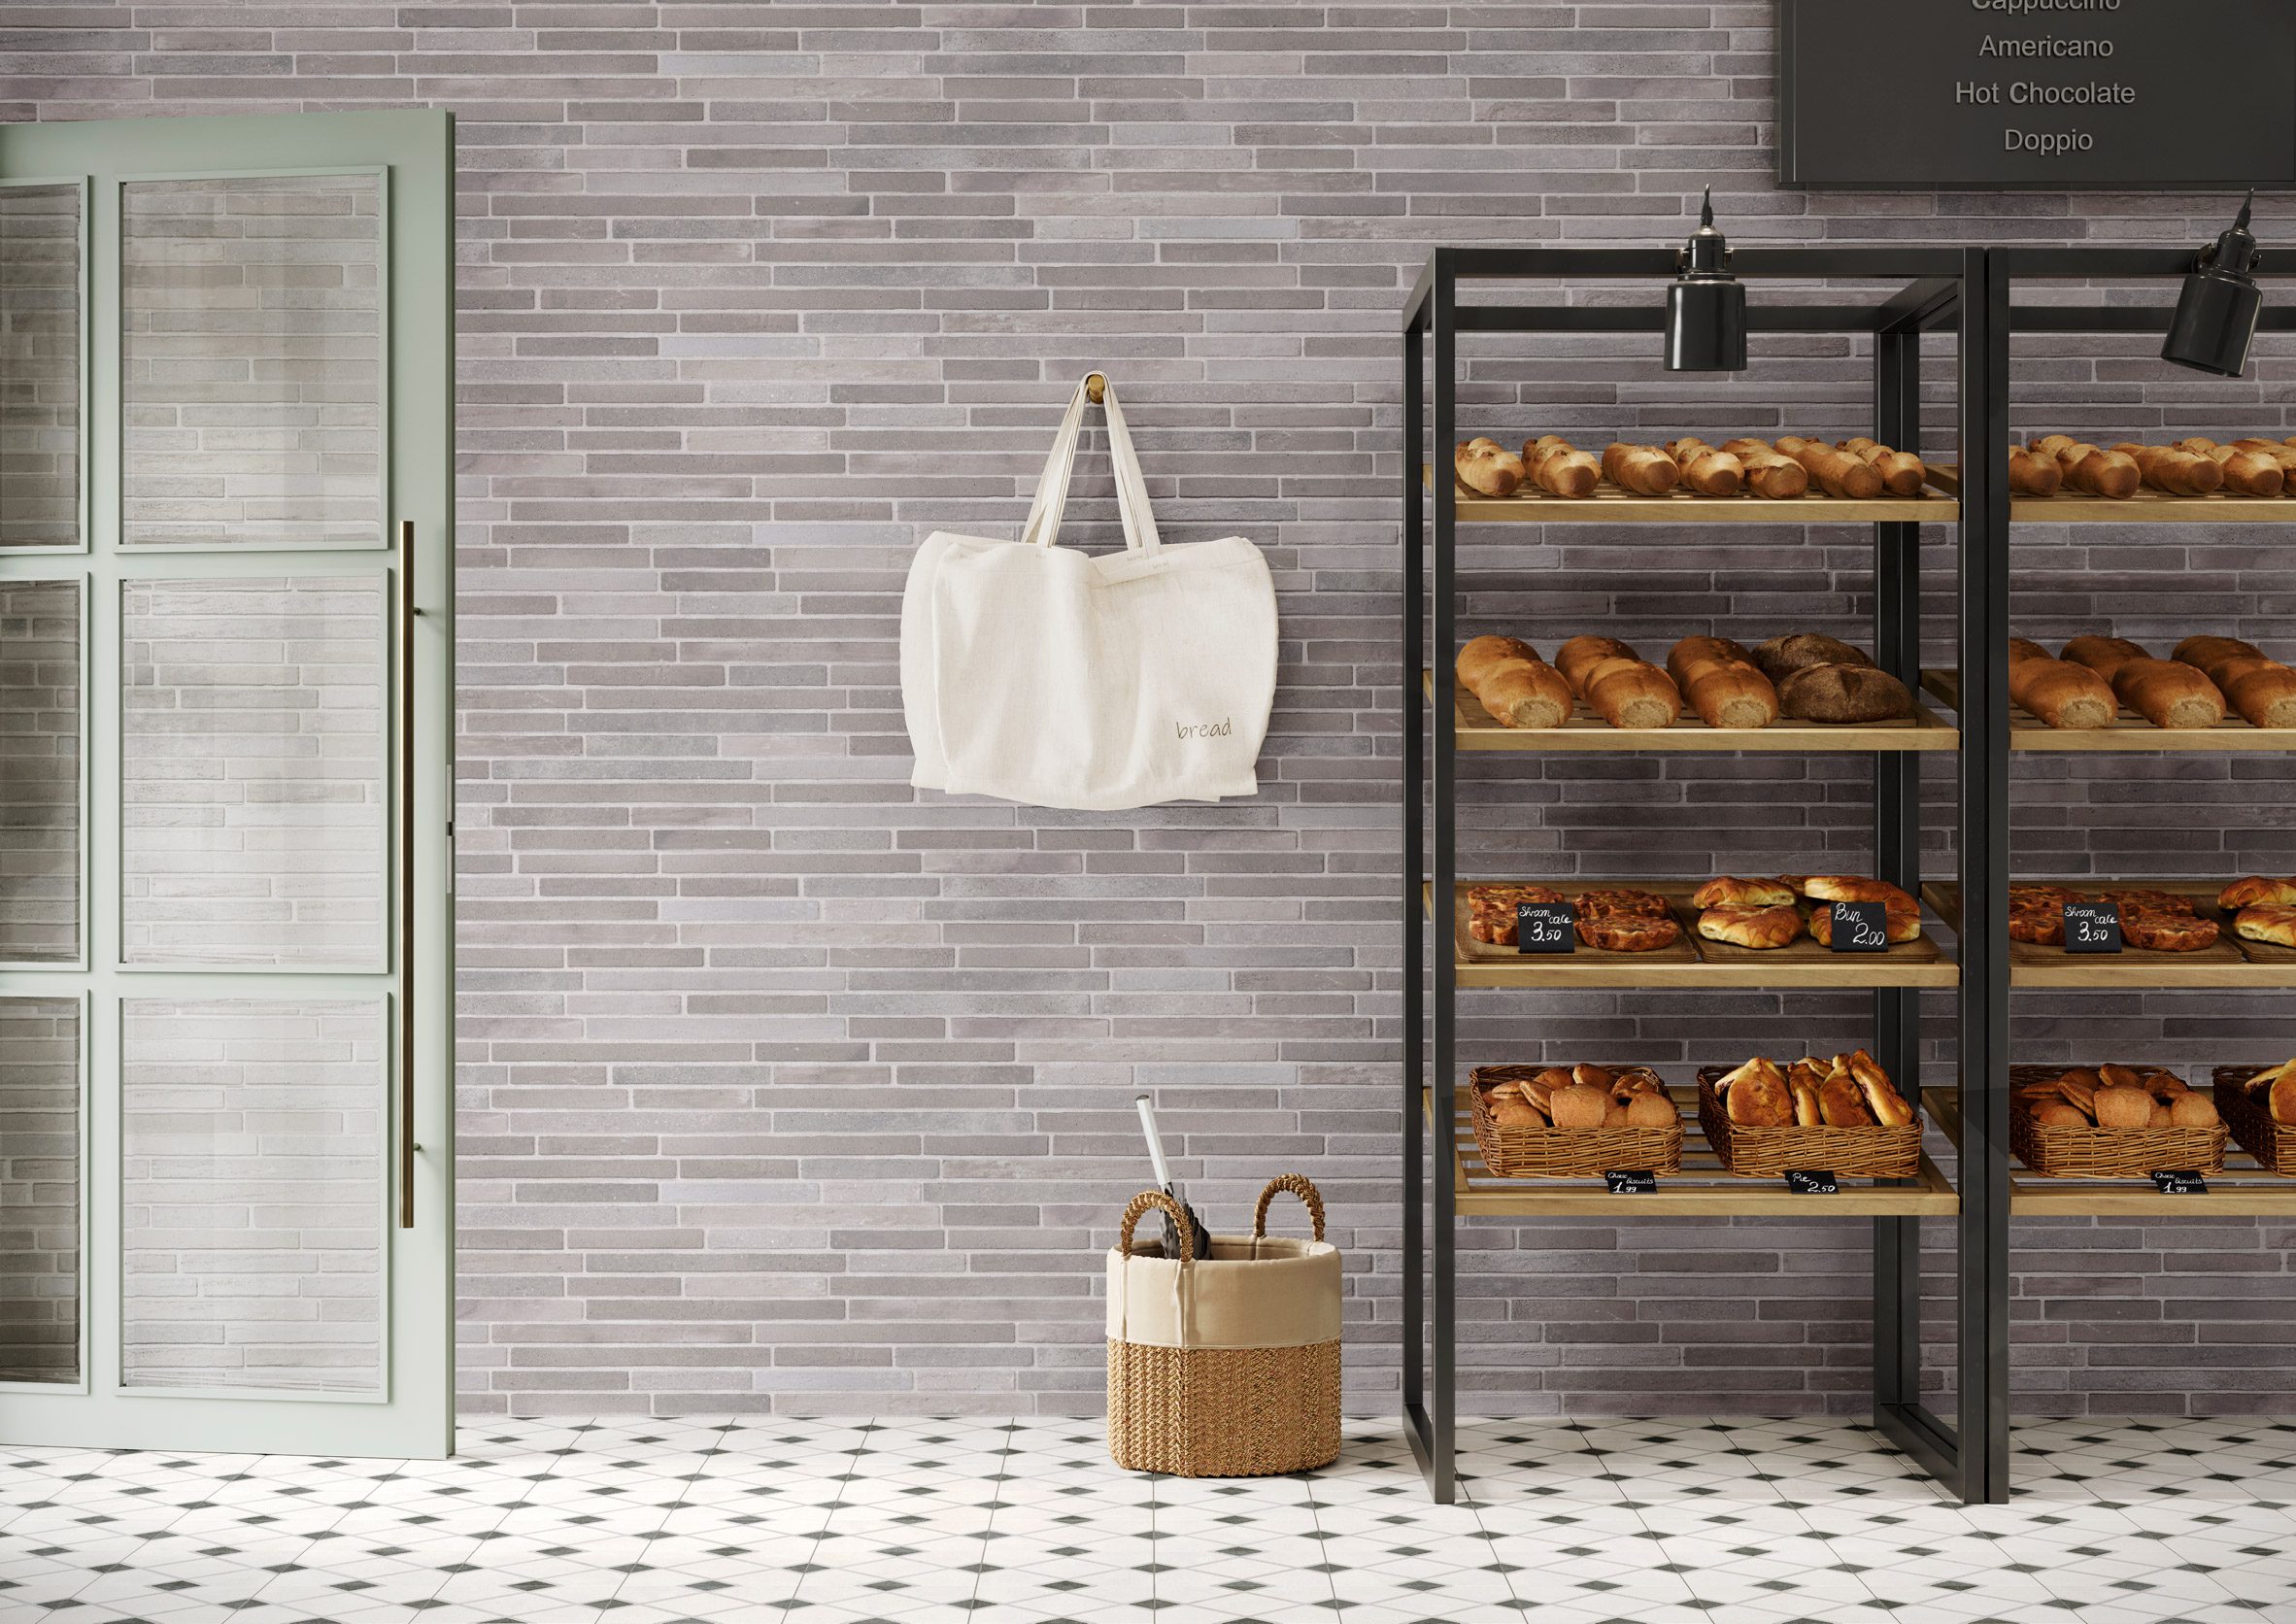 The Amsterdam tiles evoke the look of bricks